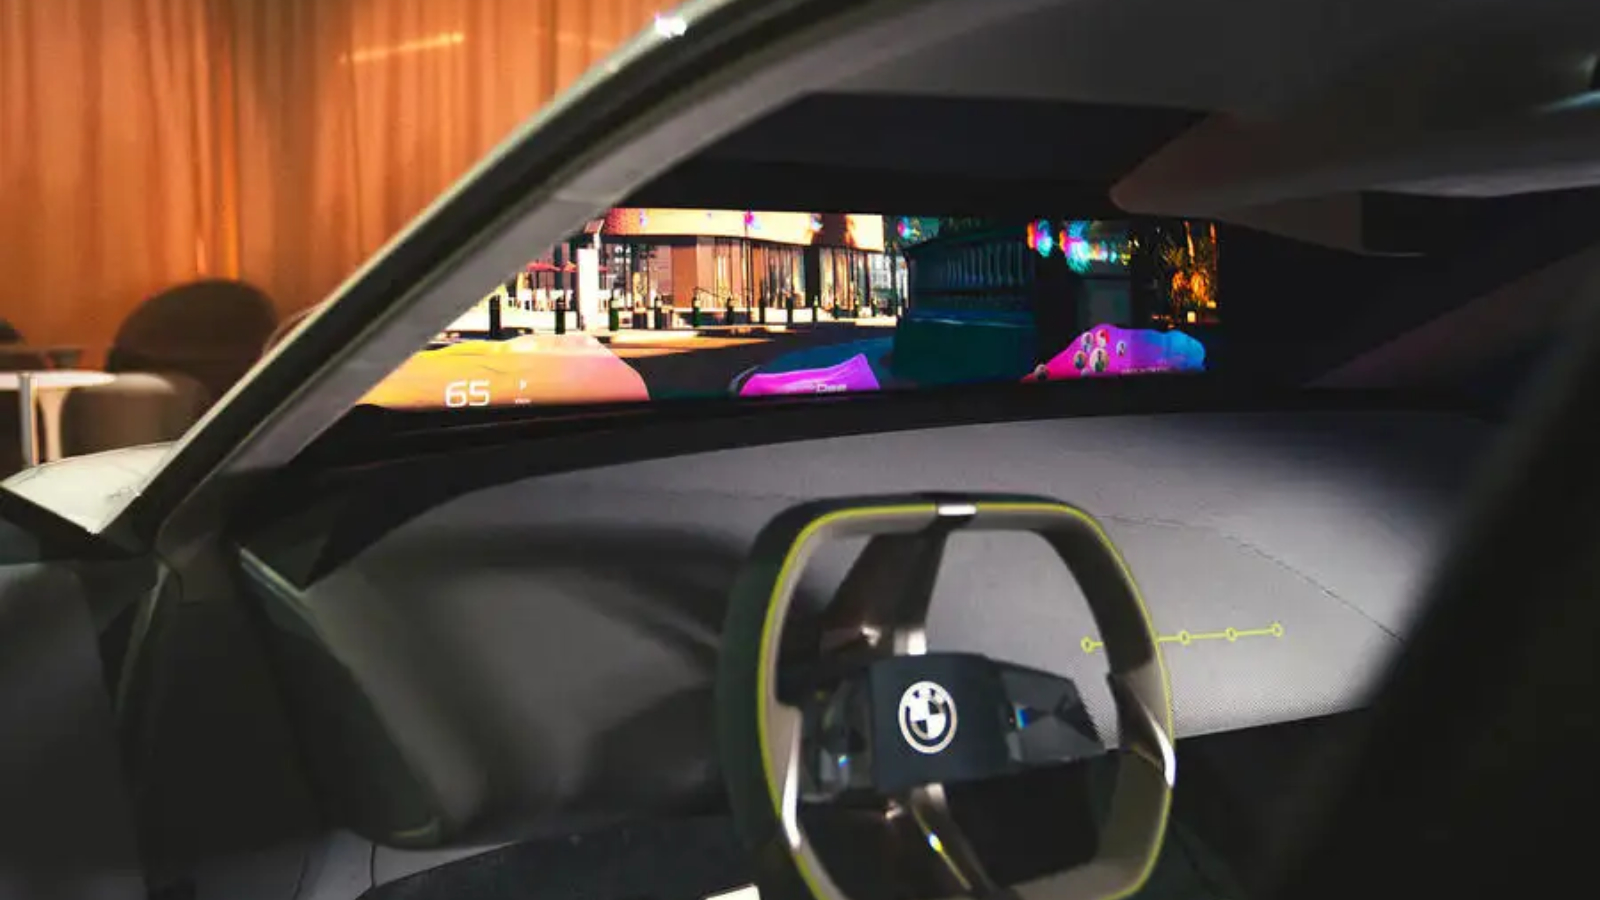 BMW i8 - How It's Made: Dream Cars (Season 2, Episode 13) - Apple TV